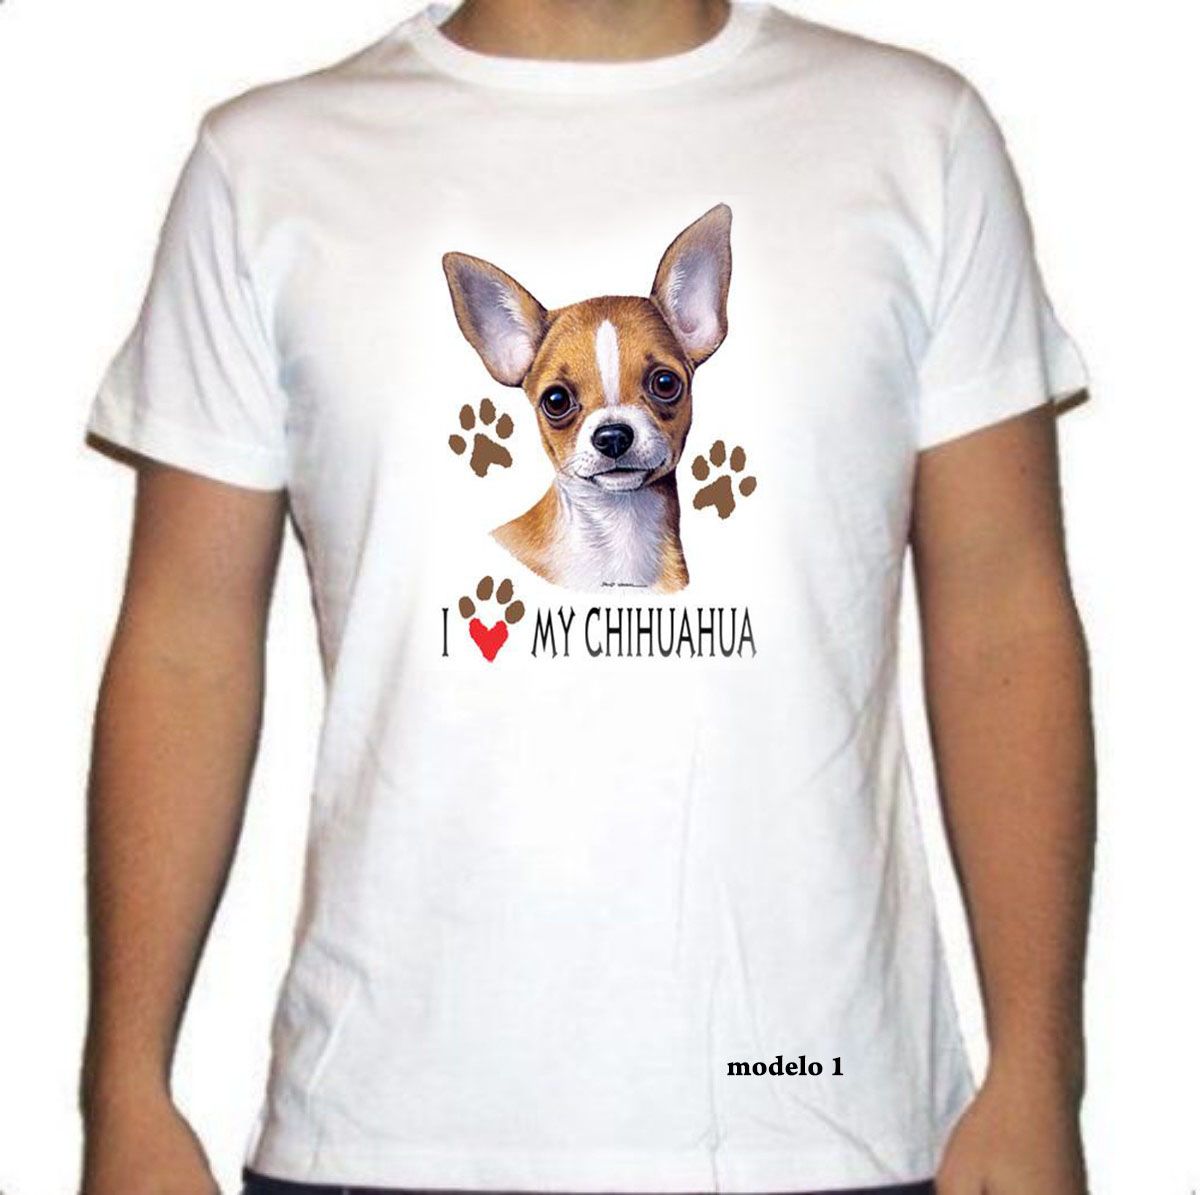 Camiseta Con la raza Chihuahua